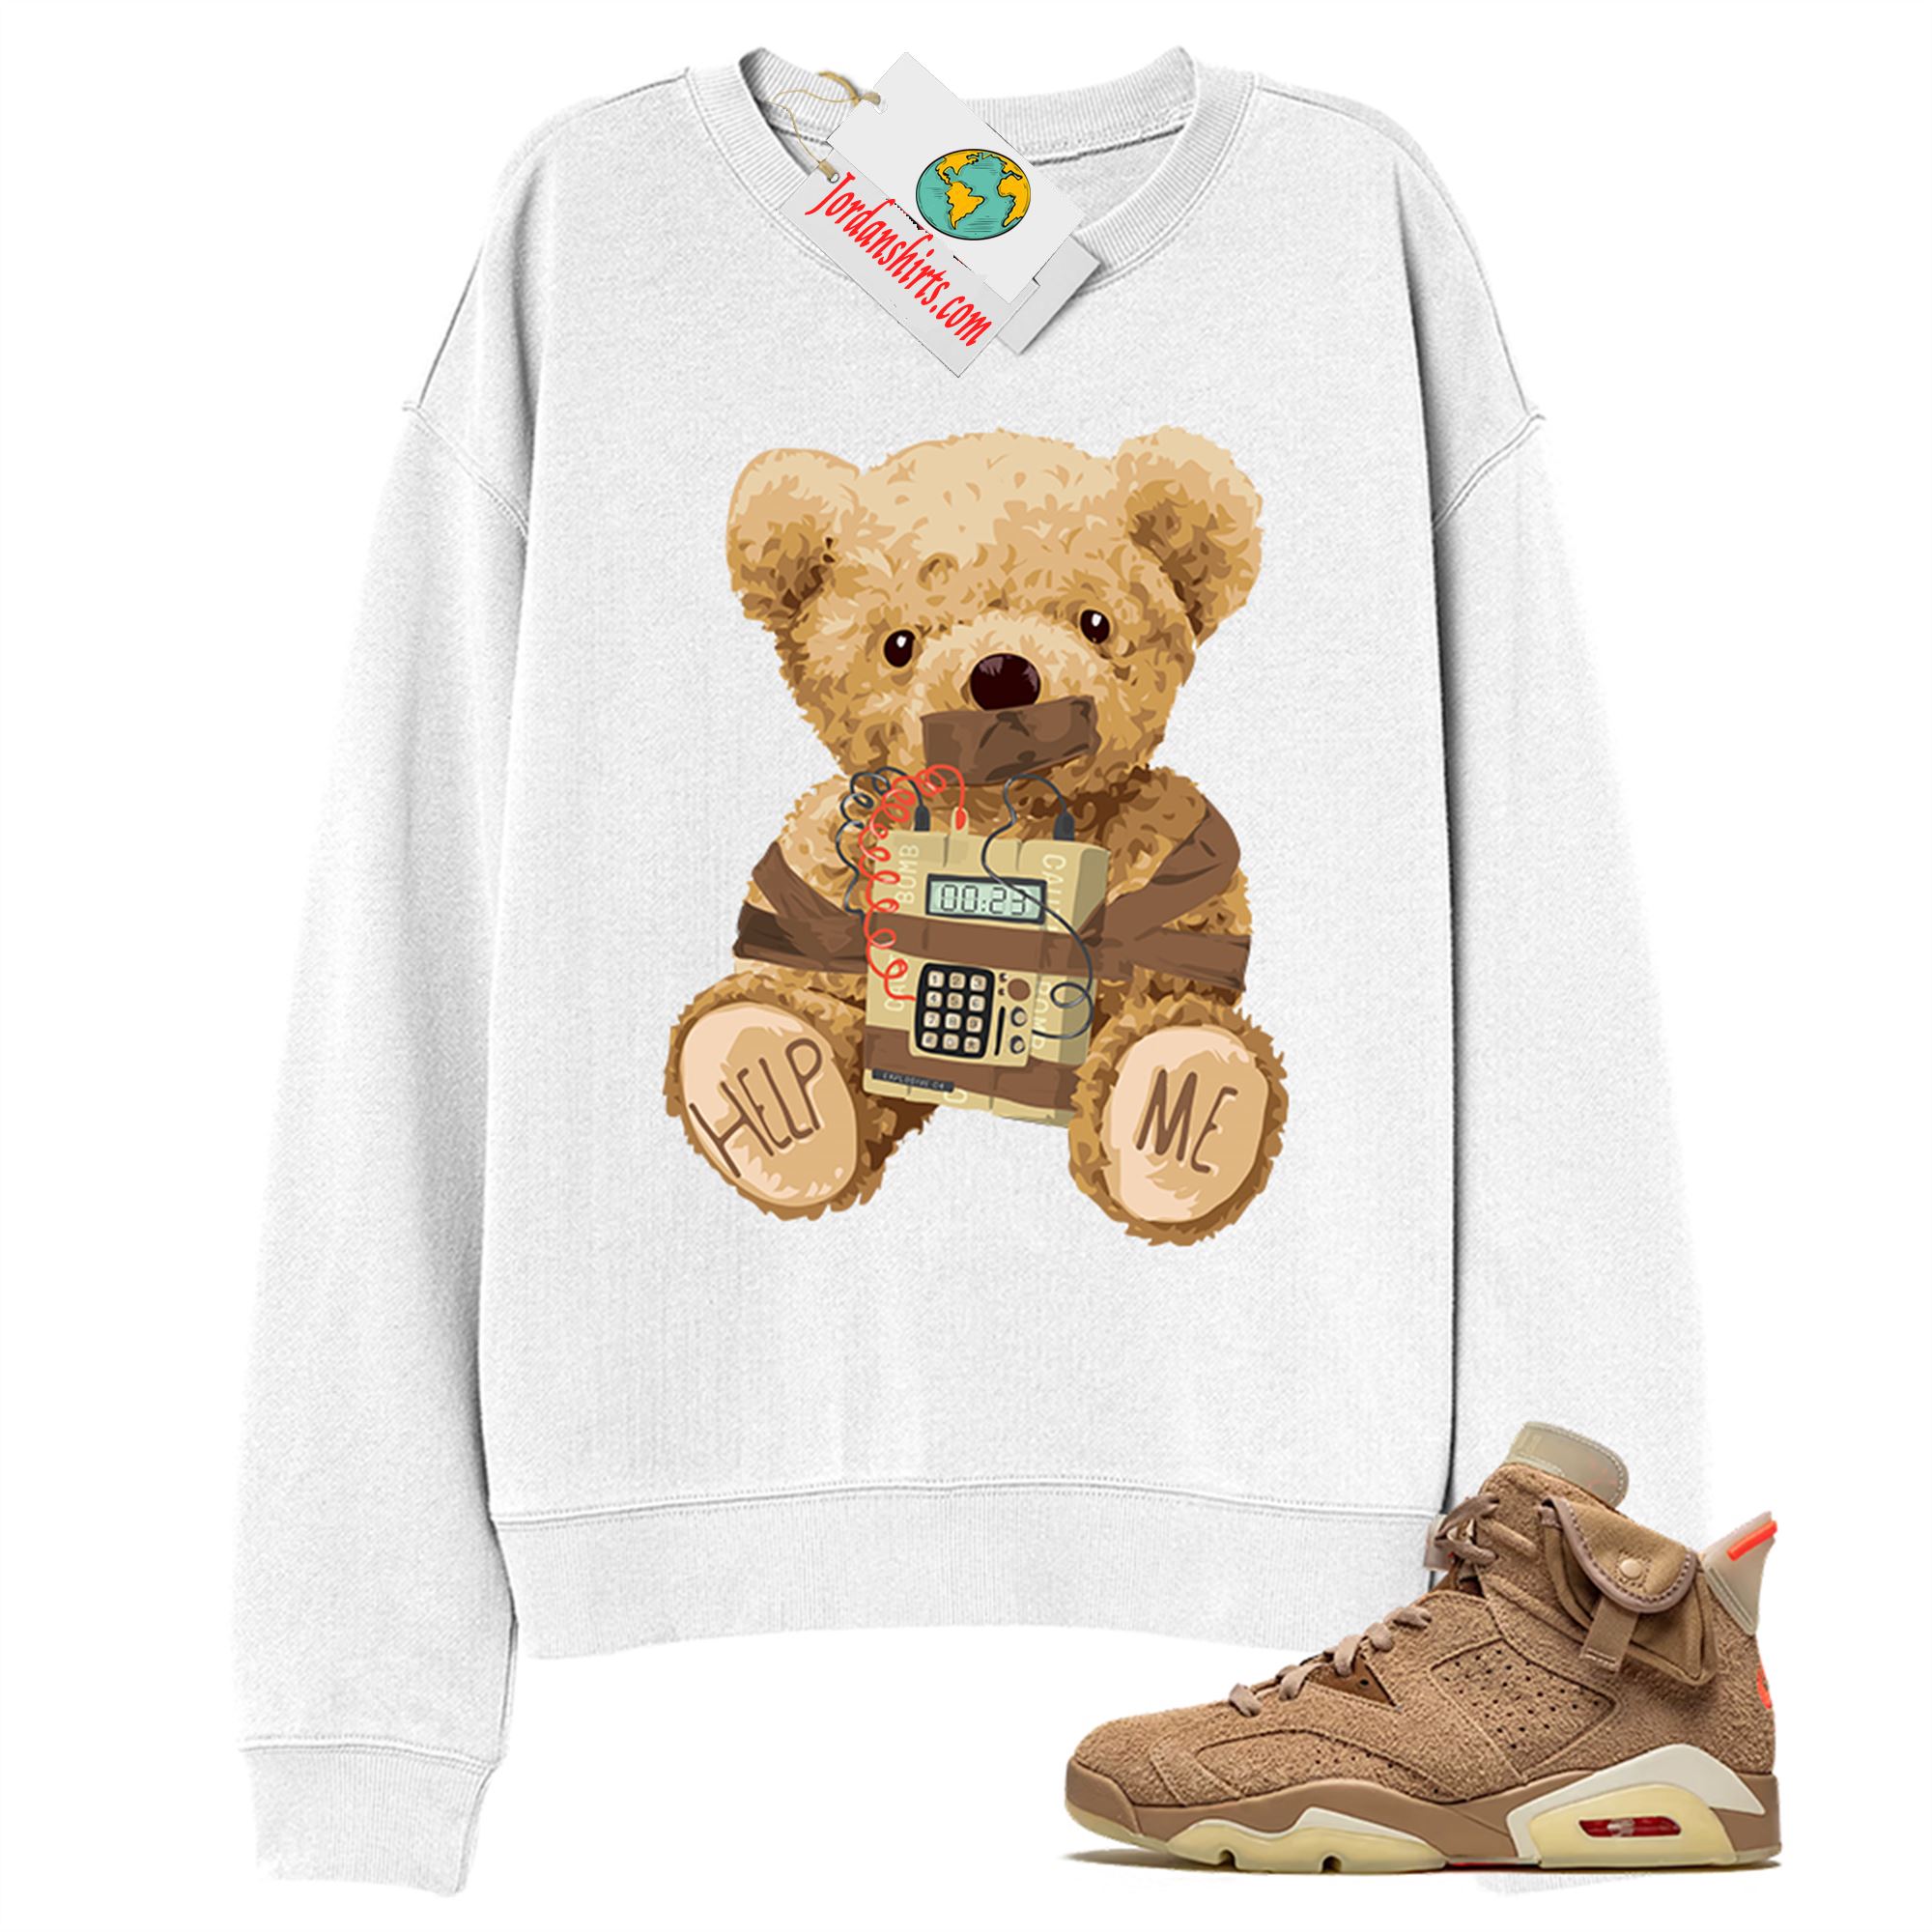 Jordan 6 Sweatshirt, Teddy Bear Bomb White Sweatshirt Air Jordan 6 Travis Scott 6s Full Size Up To 5xl